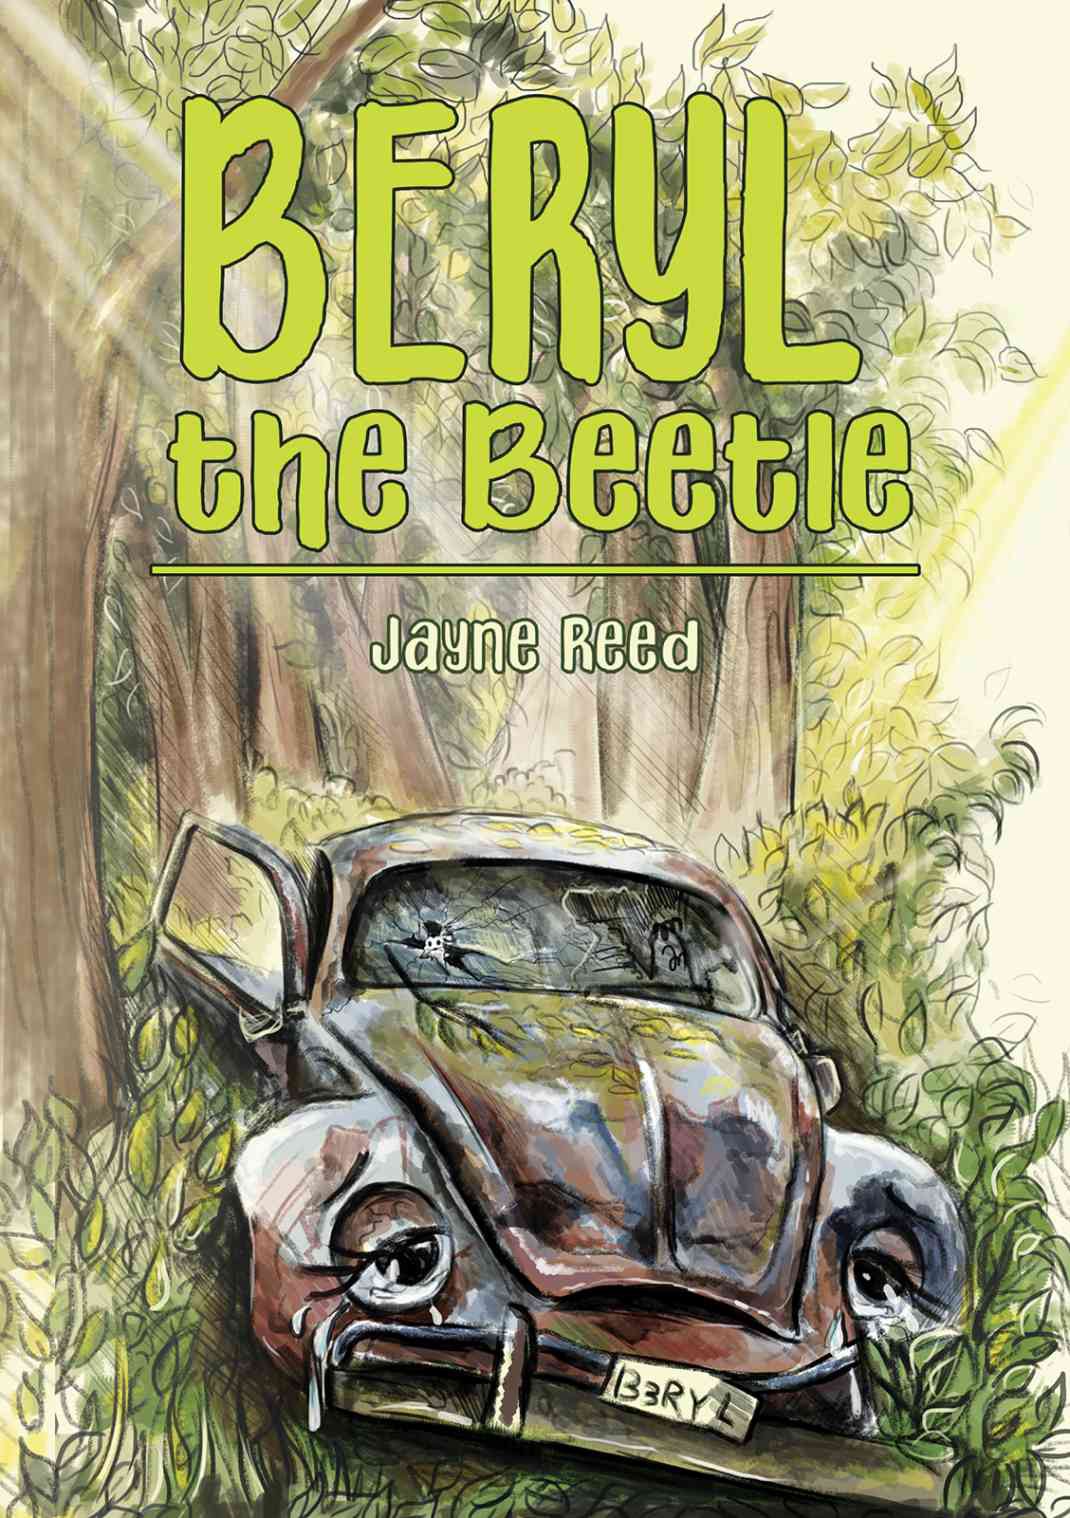 ‘Beryl the Beetle’ by Jayne Reed Featured on ‘Dorset Echo’ website